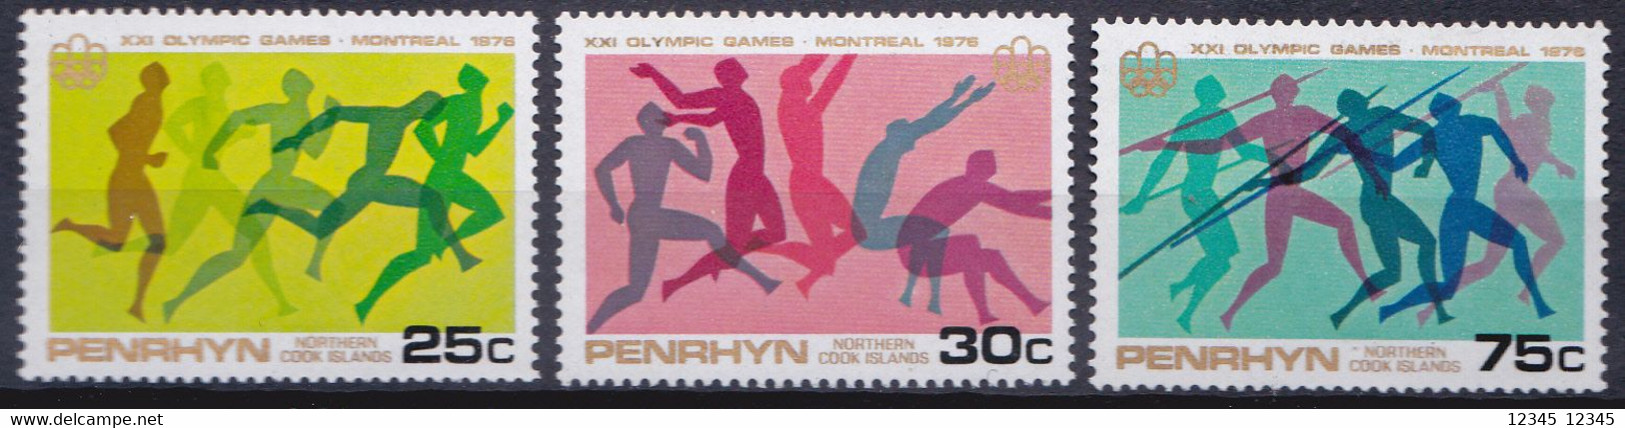 Penrhyn 1976, Postfris MNH, Olympic Games - Penrhyn